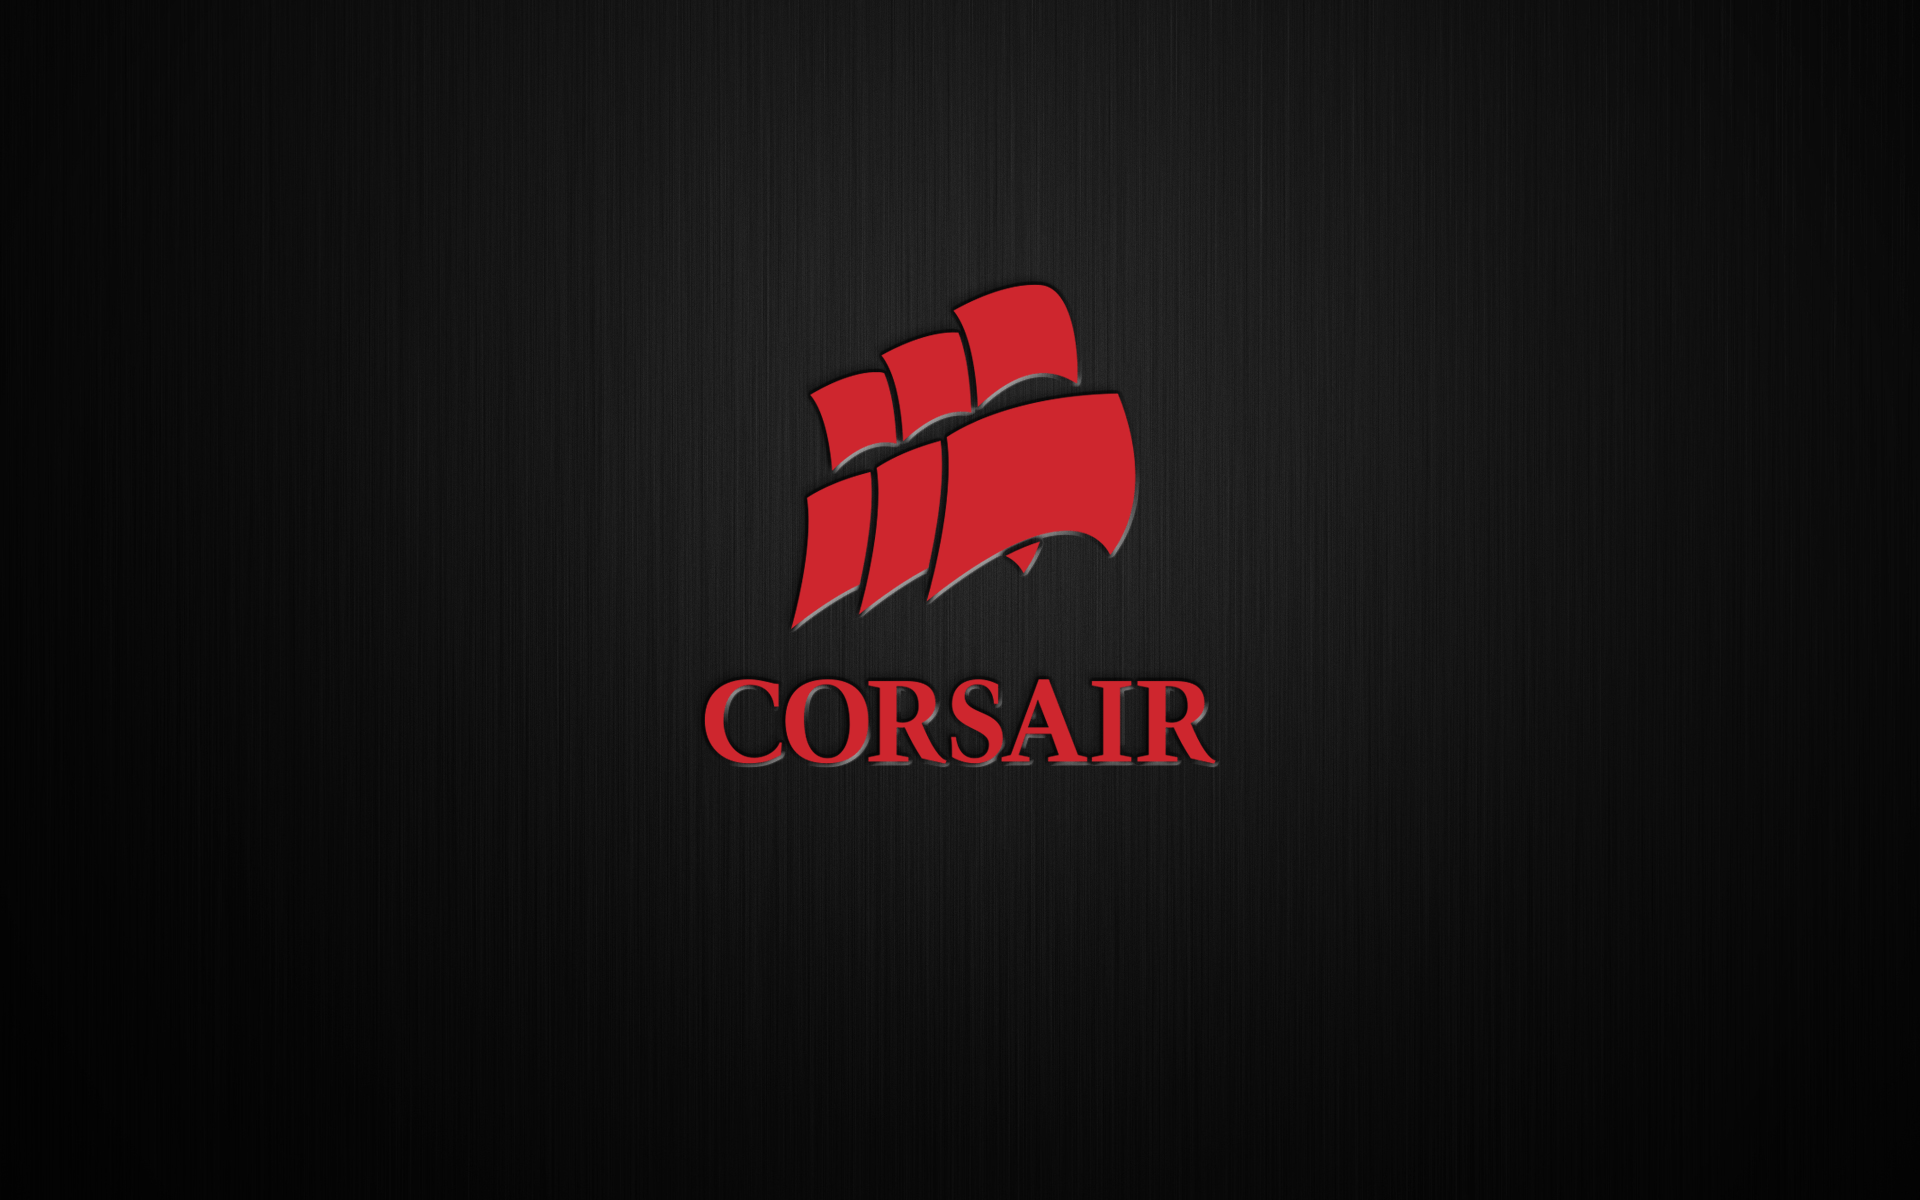 Corsair Red HD Wallpapers - Top Free Corsair Red HD ...